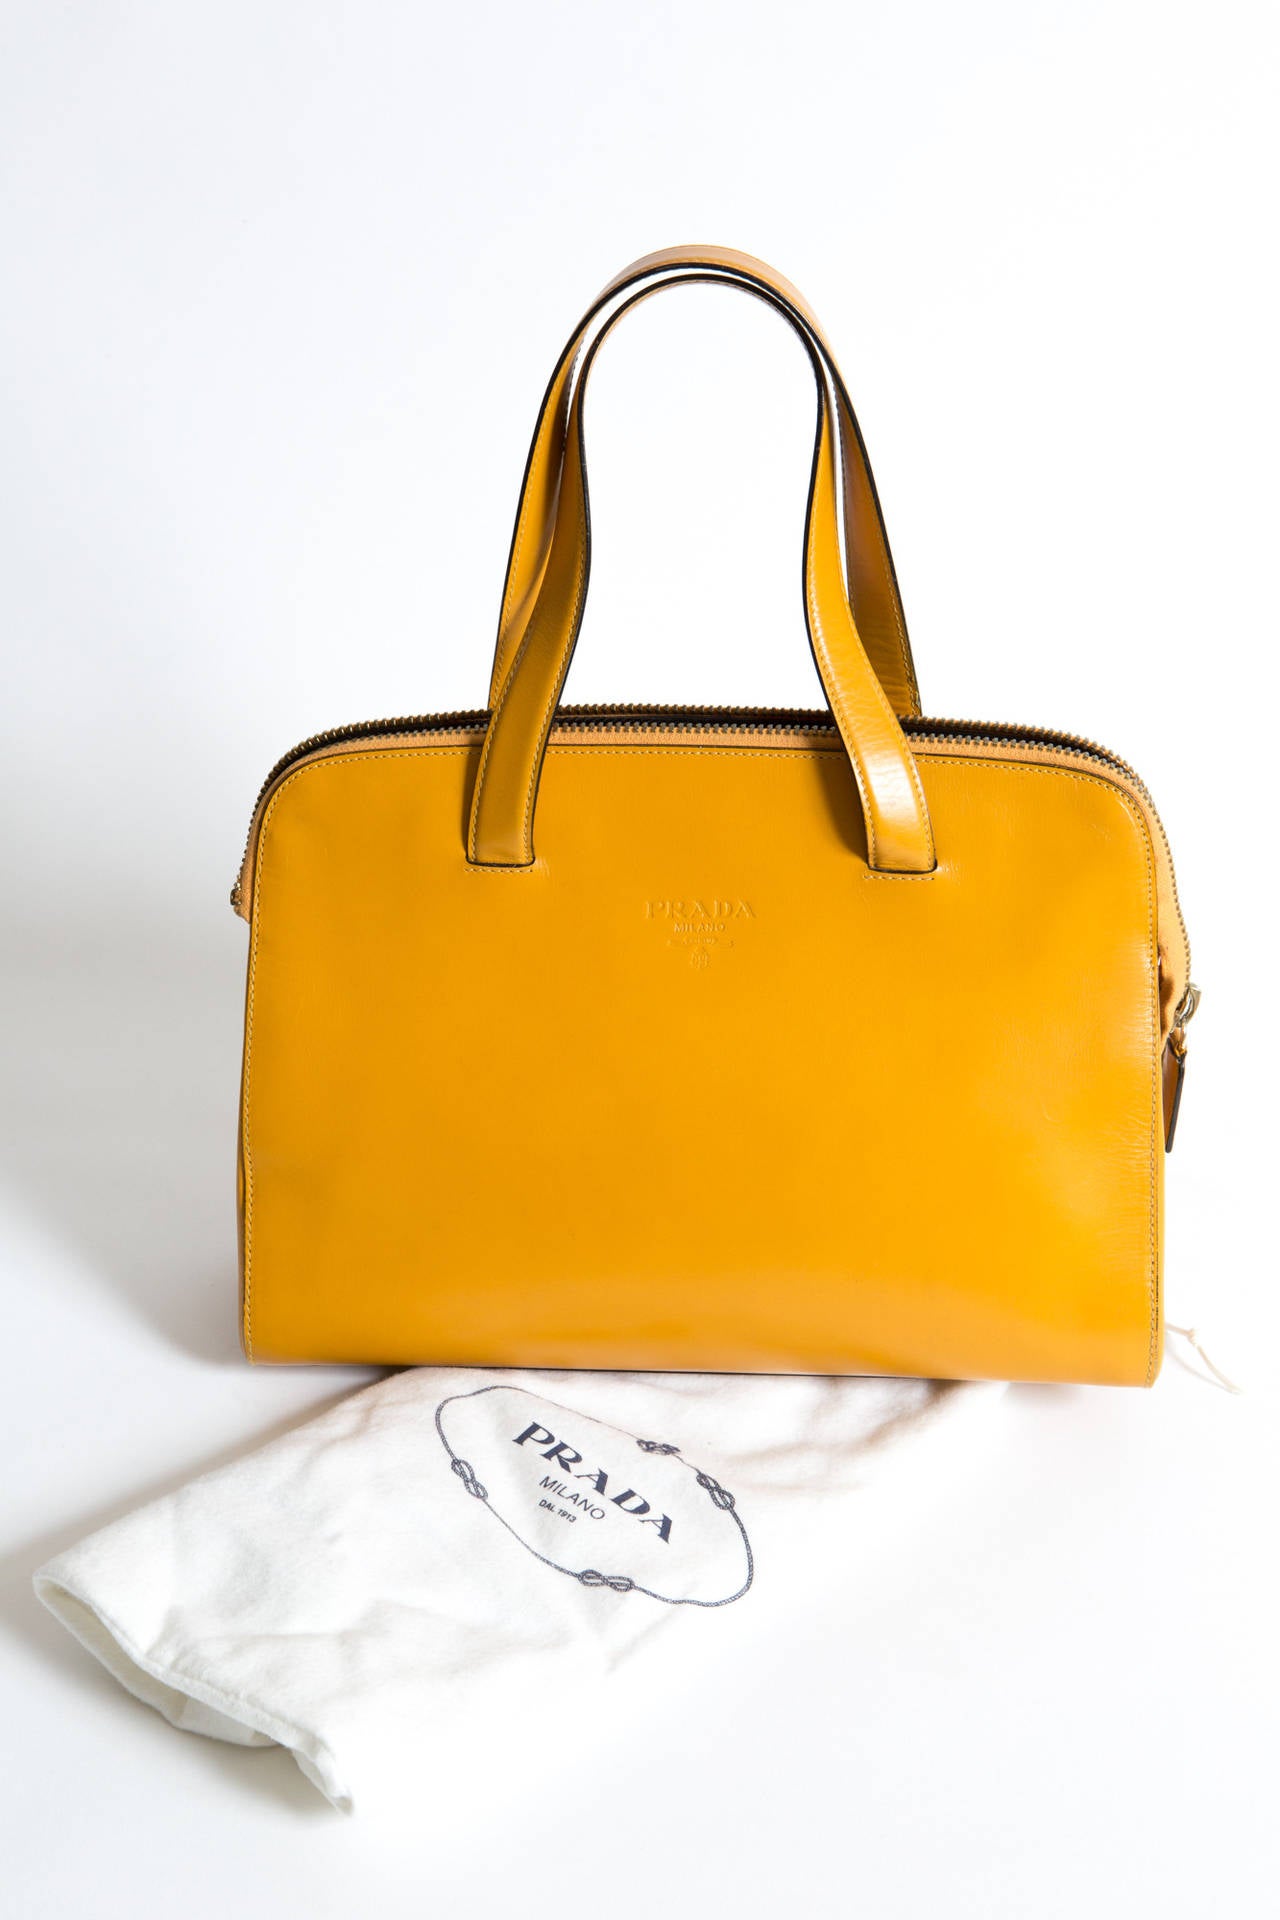 prada saffiano lux tote red - Prada Yellow Sun Leather Bag at 1stdibs